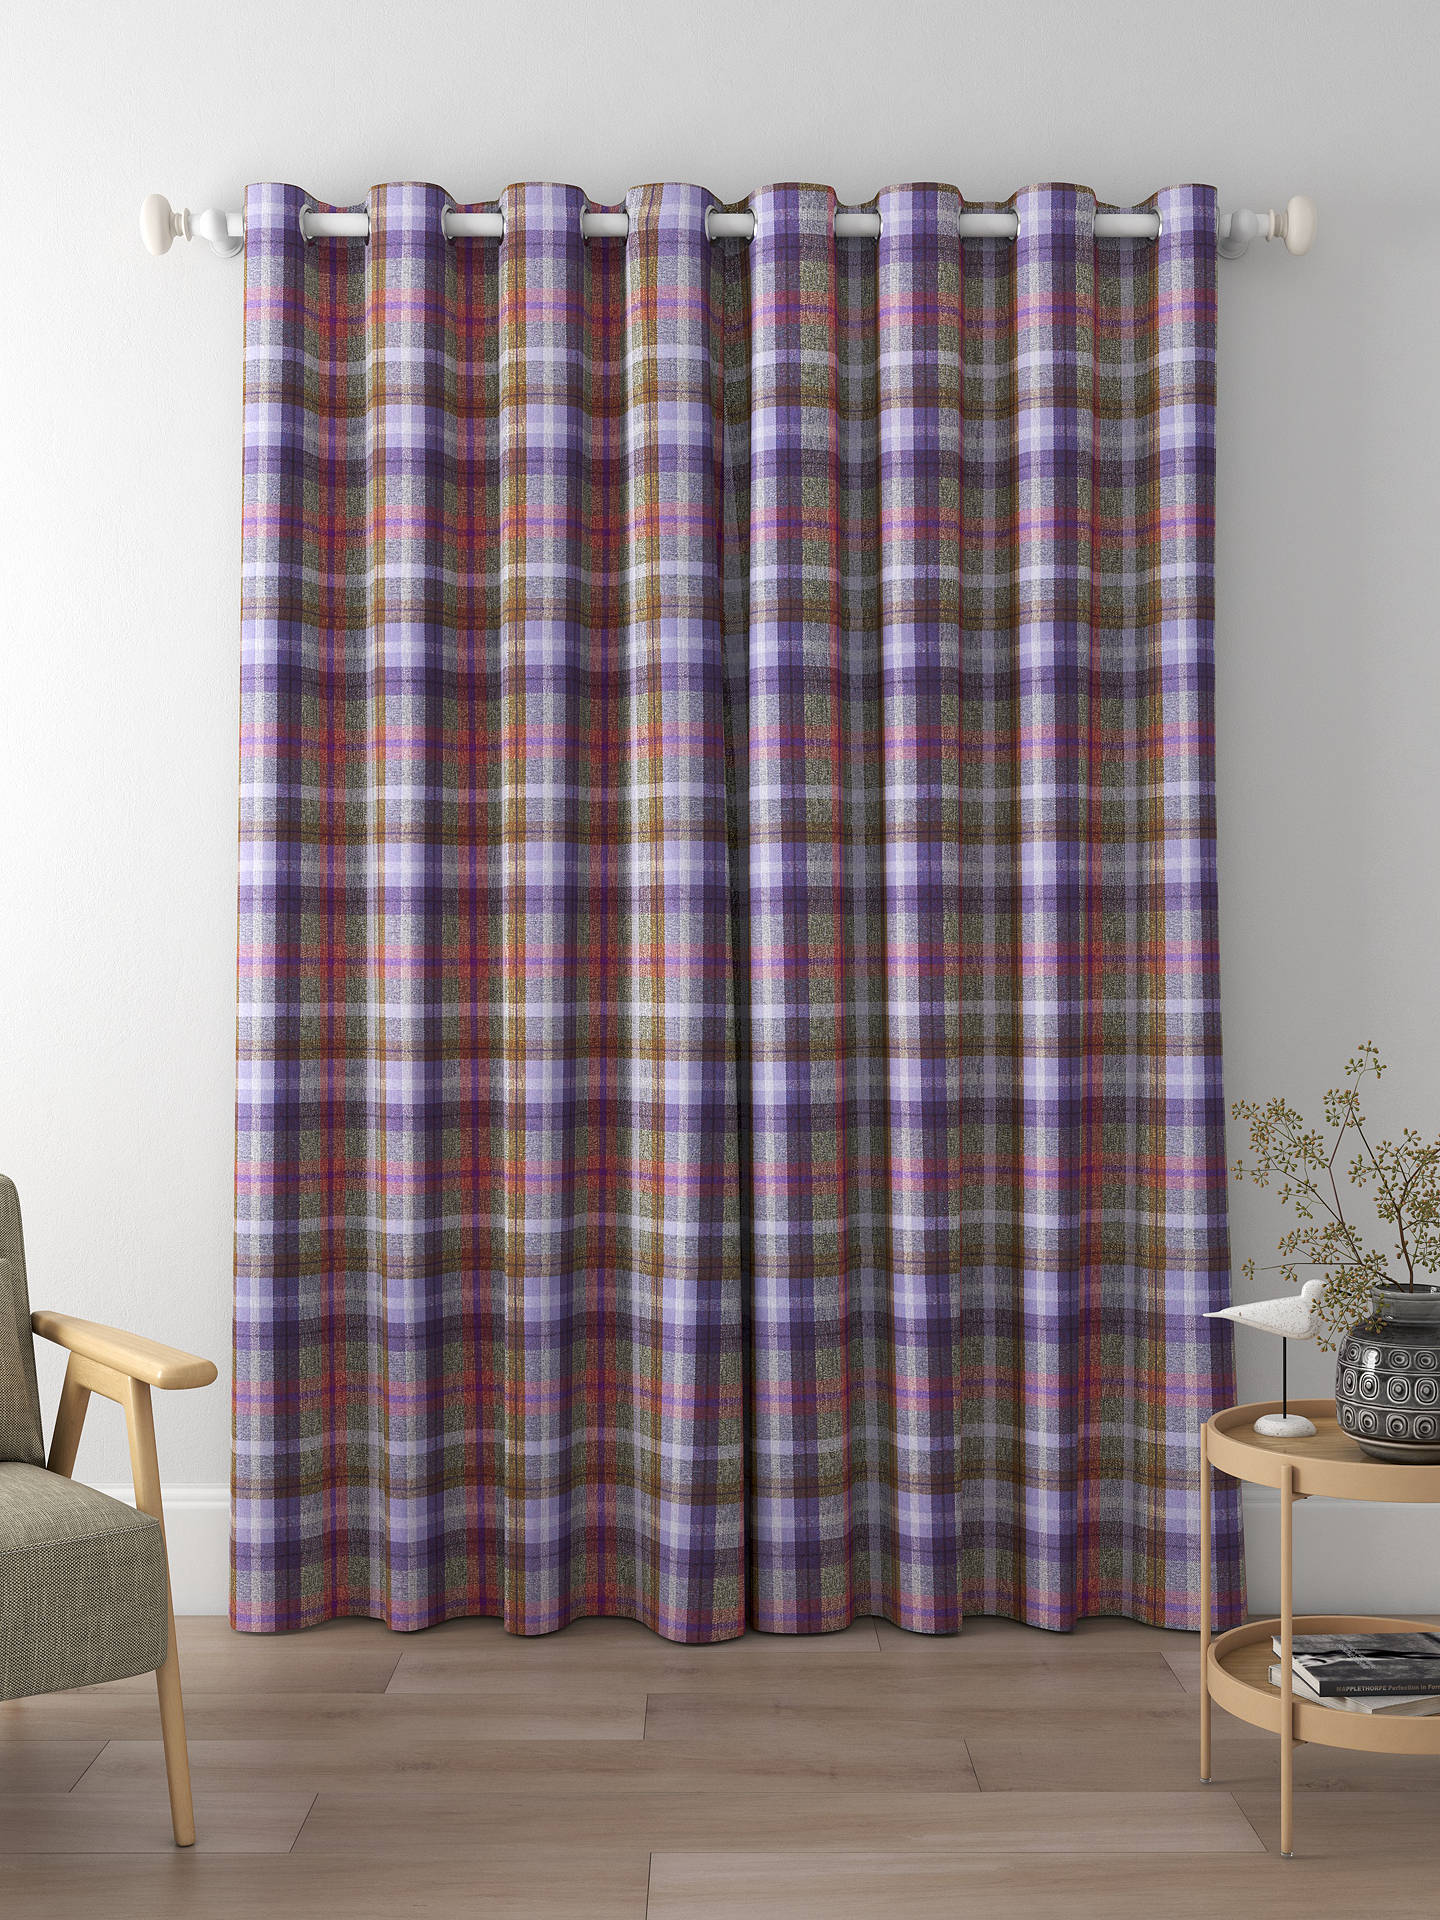 Prestigious Textiles Galloway Made to Measure Curtains, Heather